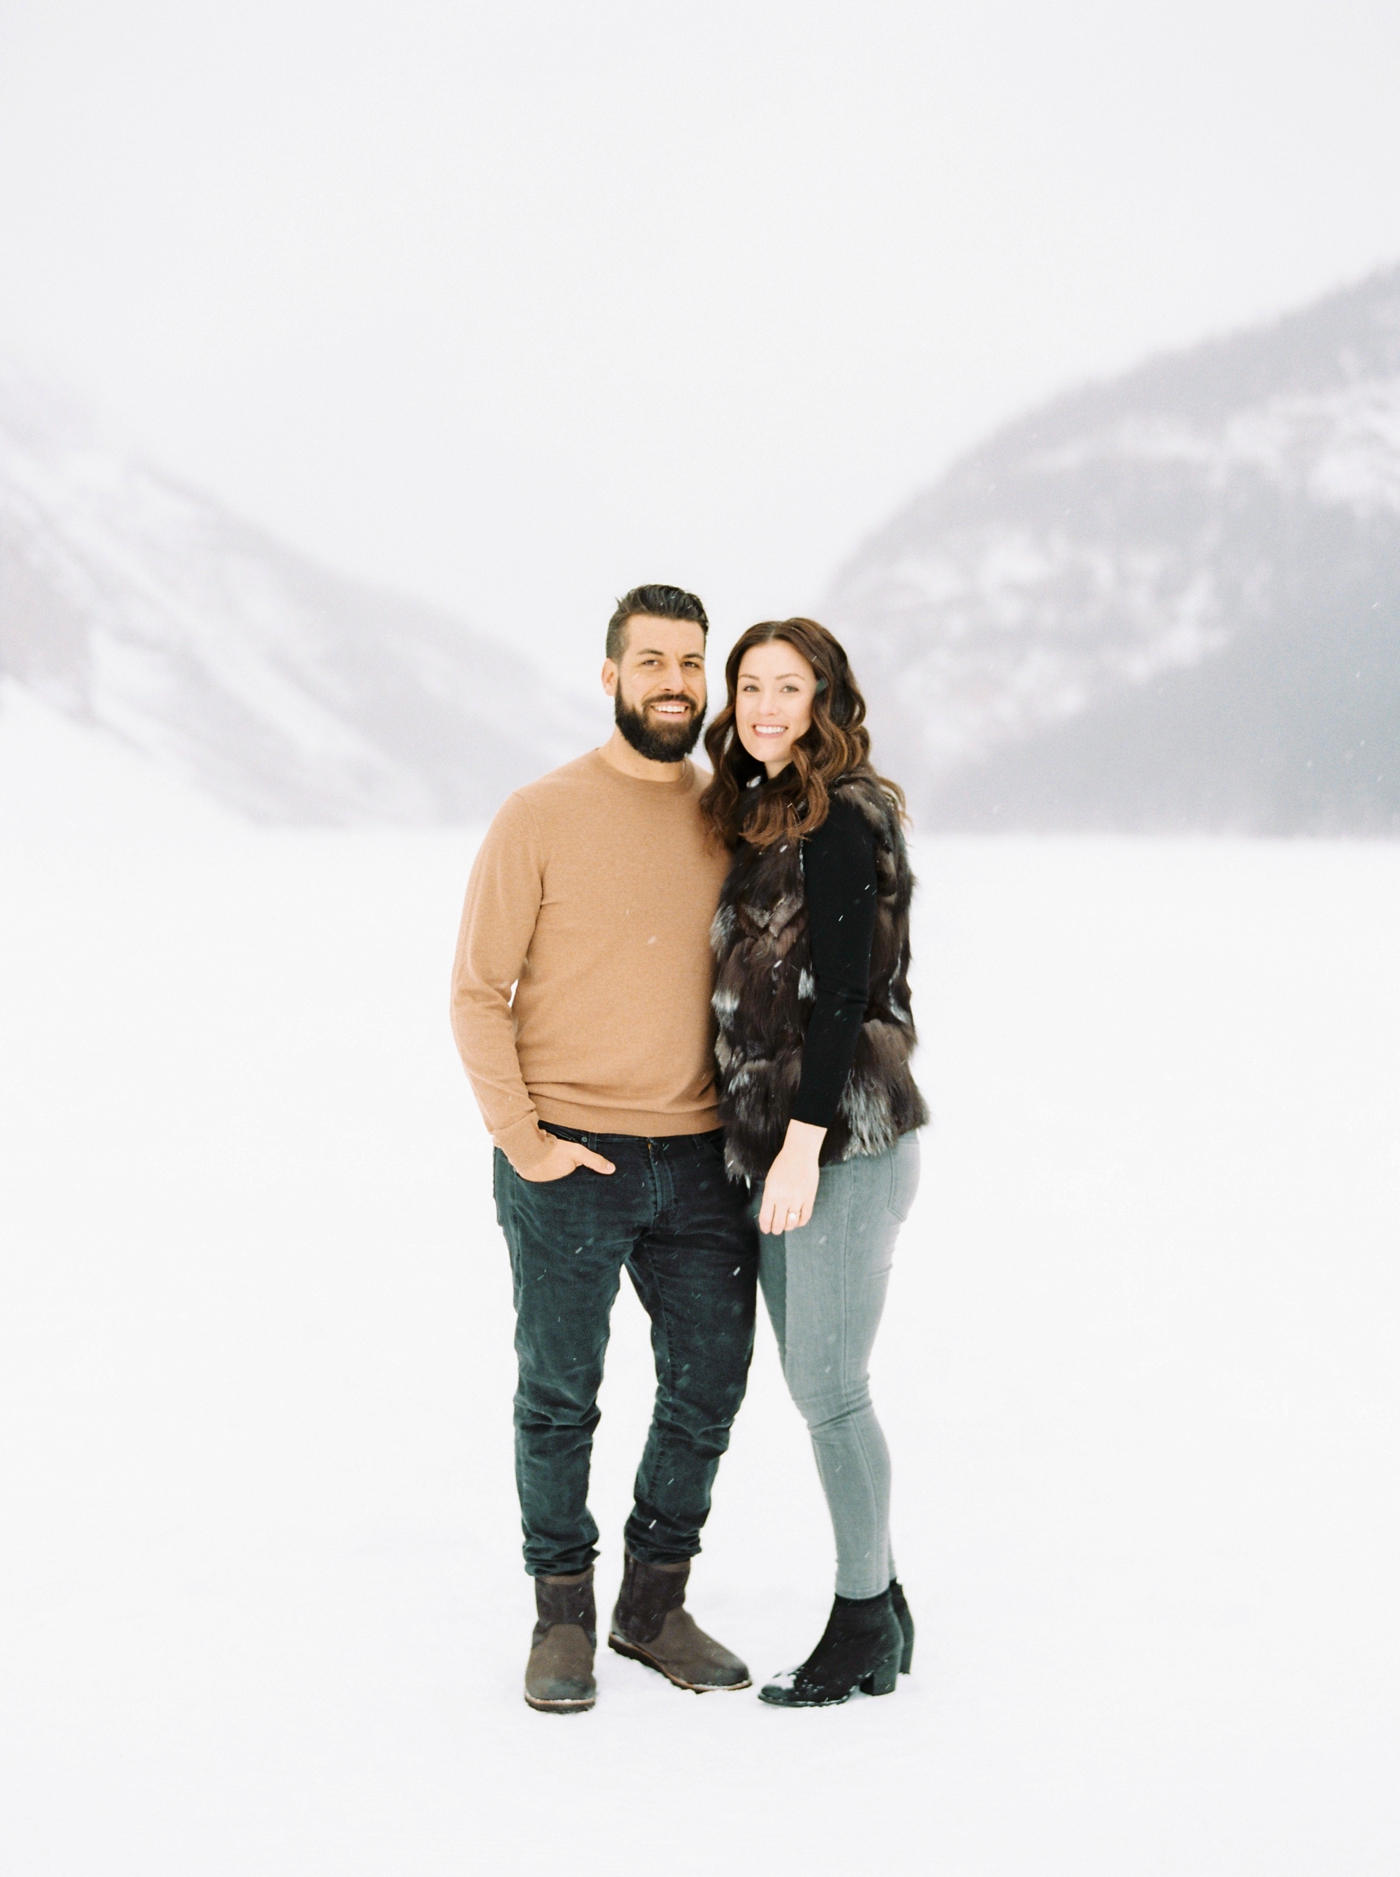 Lake Louise Banff Engagement Session | Winter Snowy Couples Photos | Banff photographers | Jusitne Milton Photography 